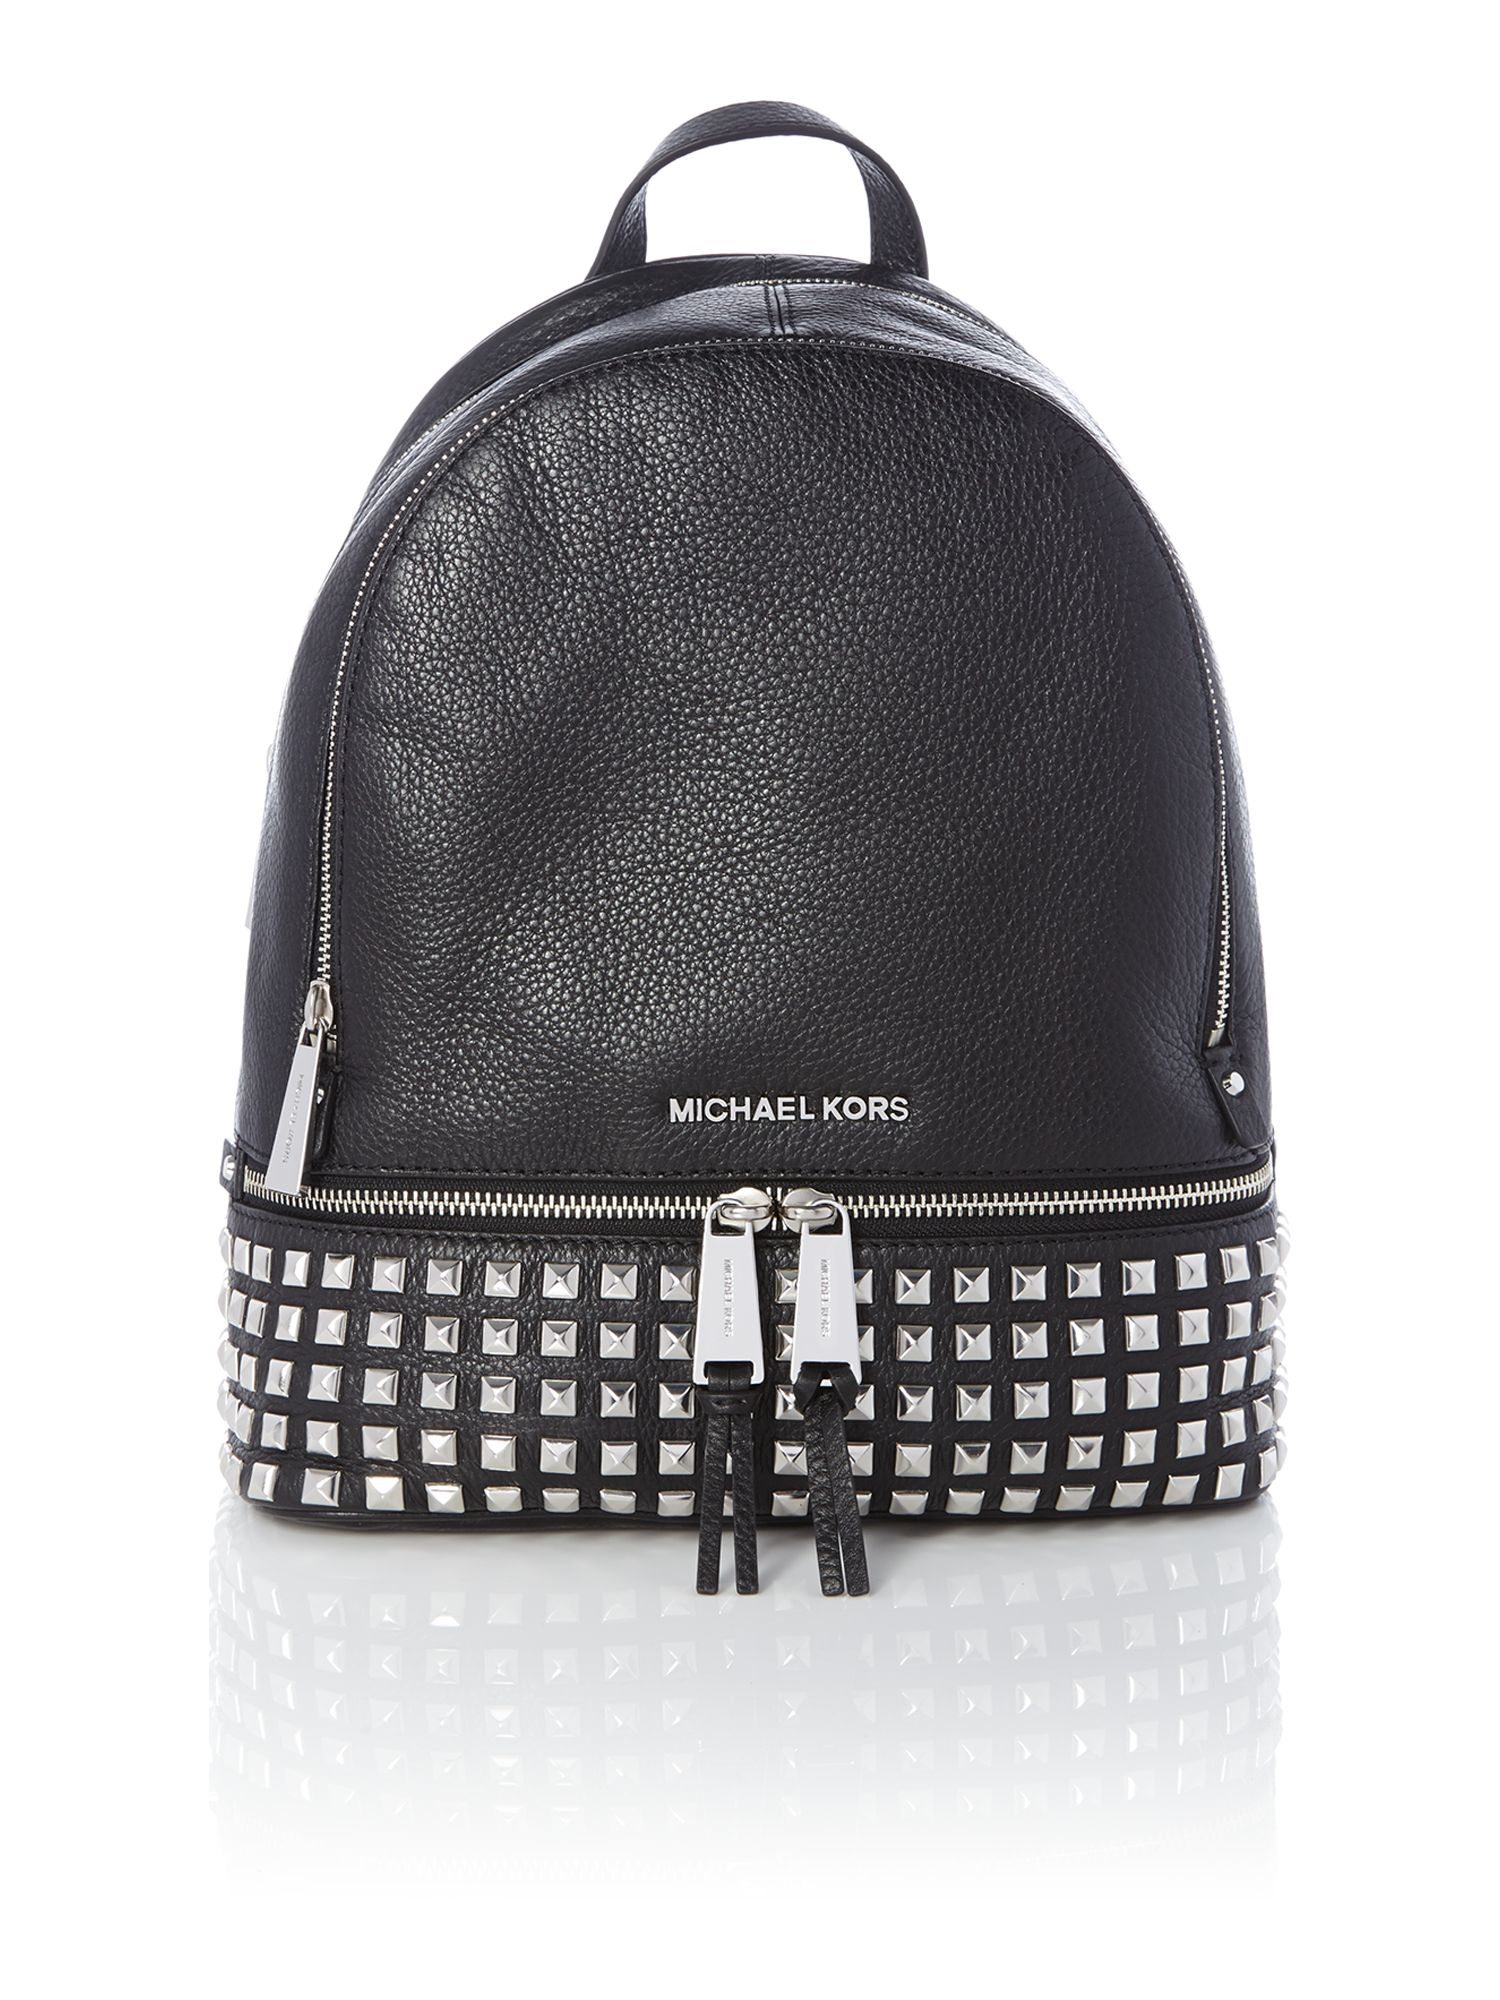 Michael kors Rhea Zip Black Small Studded Backpack in Black | Lyst